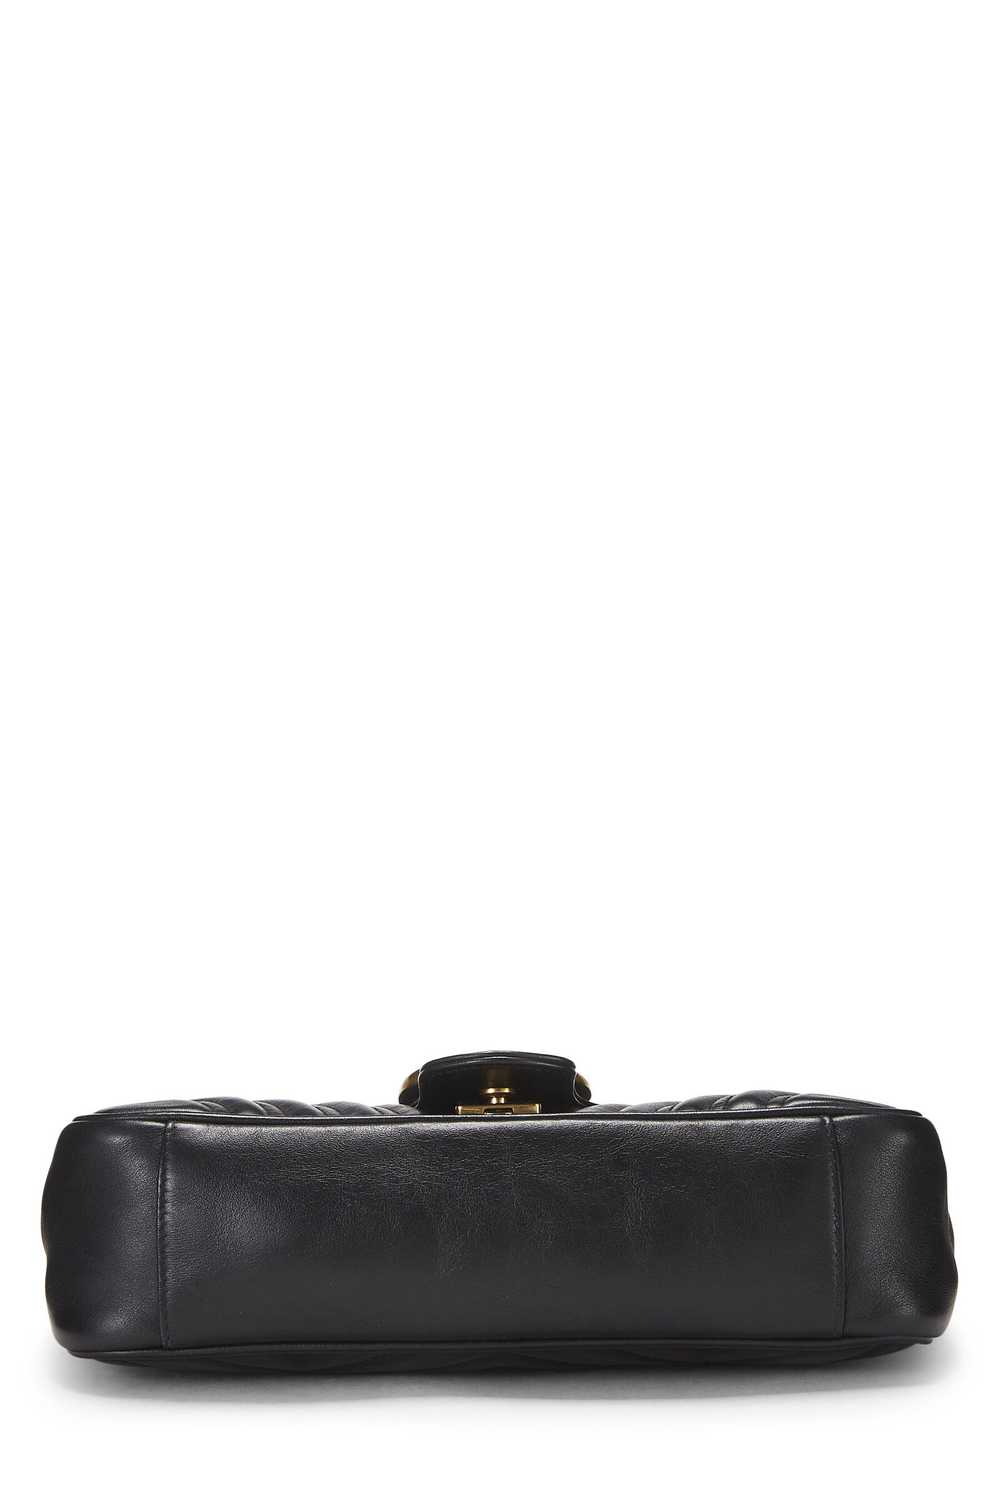 Black Leather GG Marmont Shoulder Bag Small - image 5